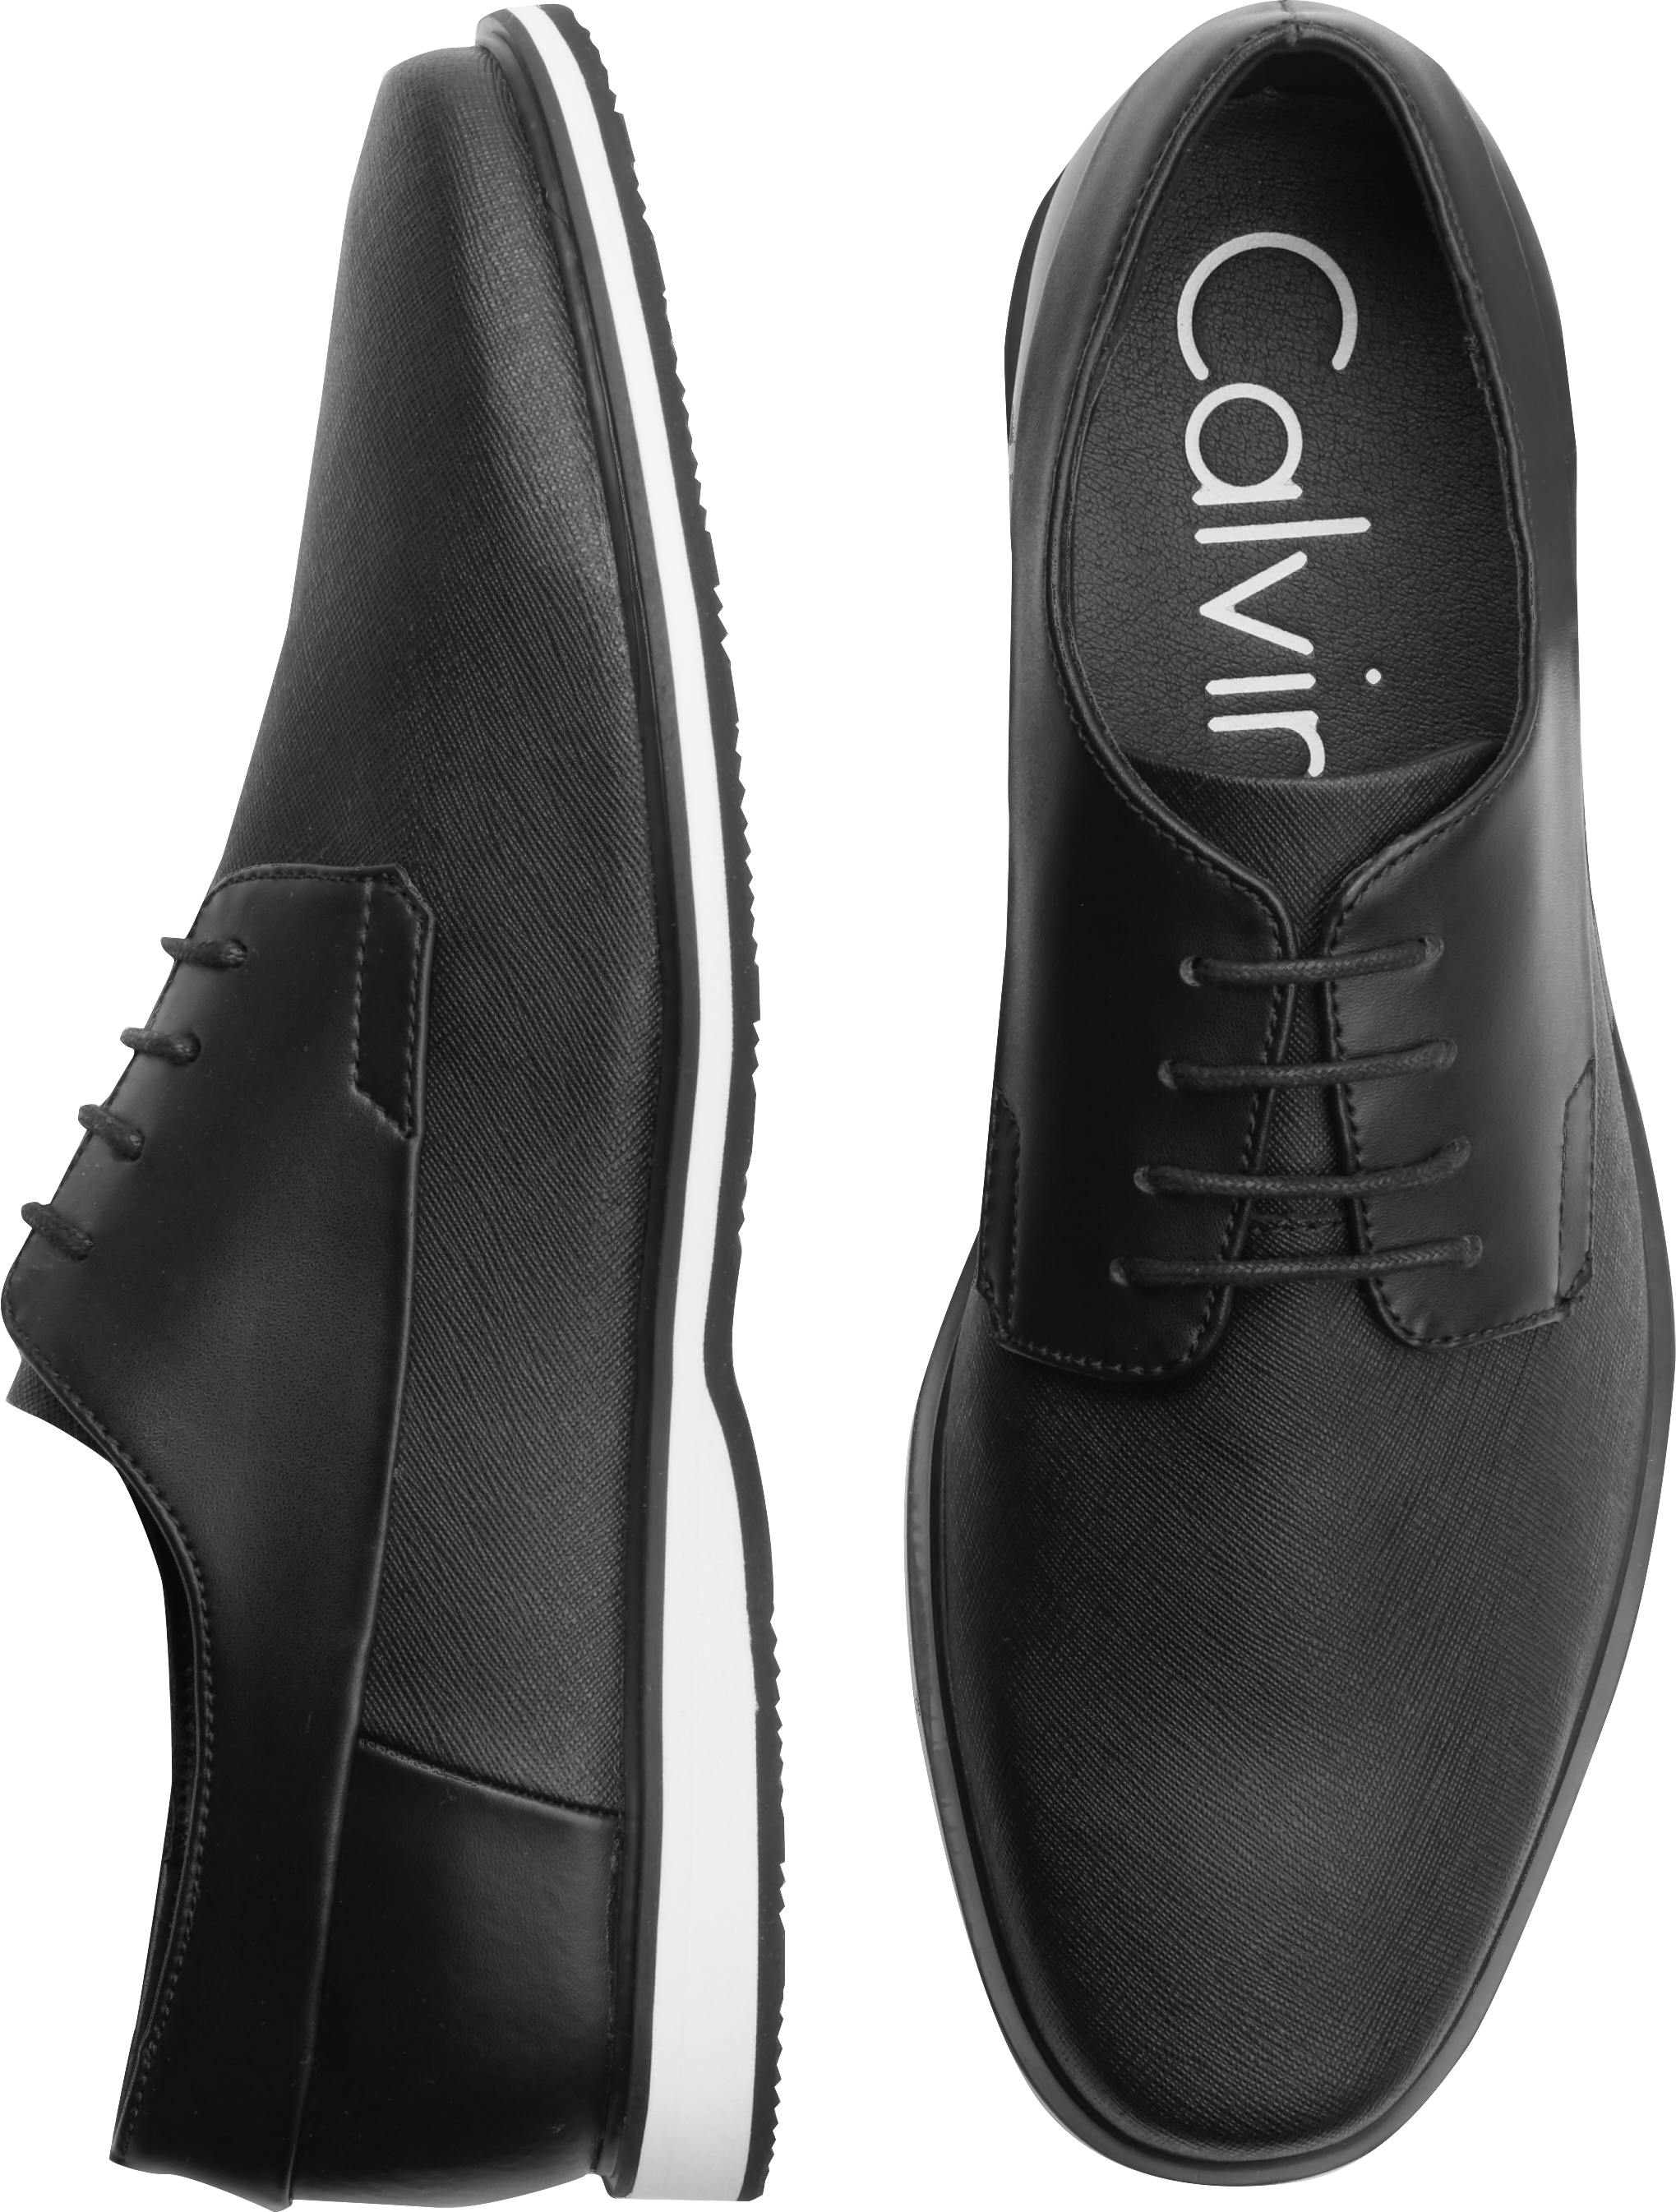 calvin klein dress shoes black